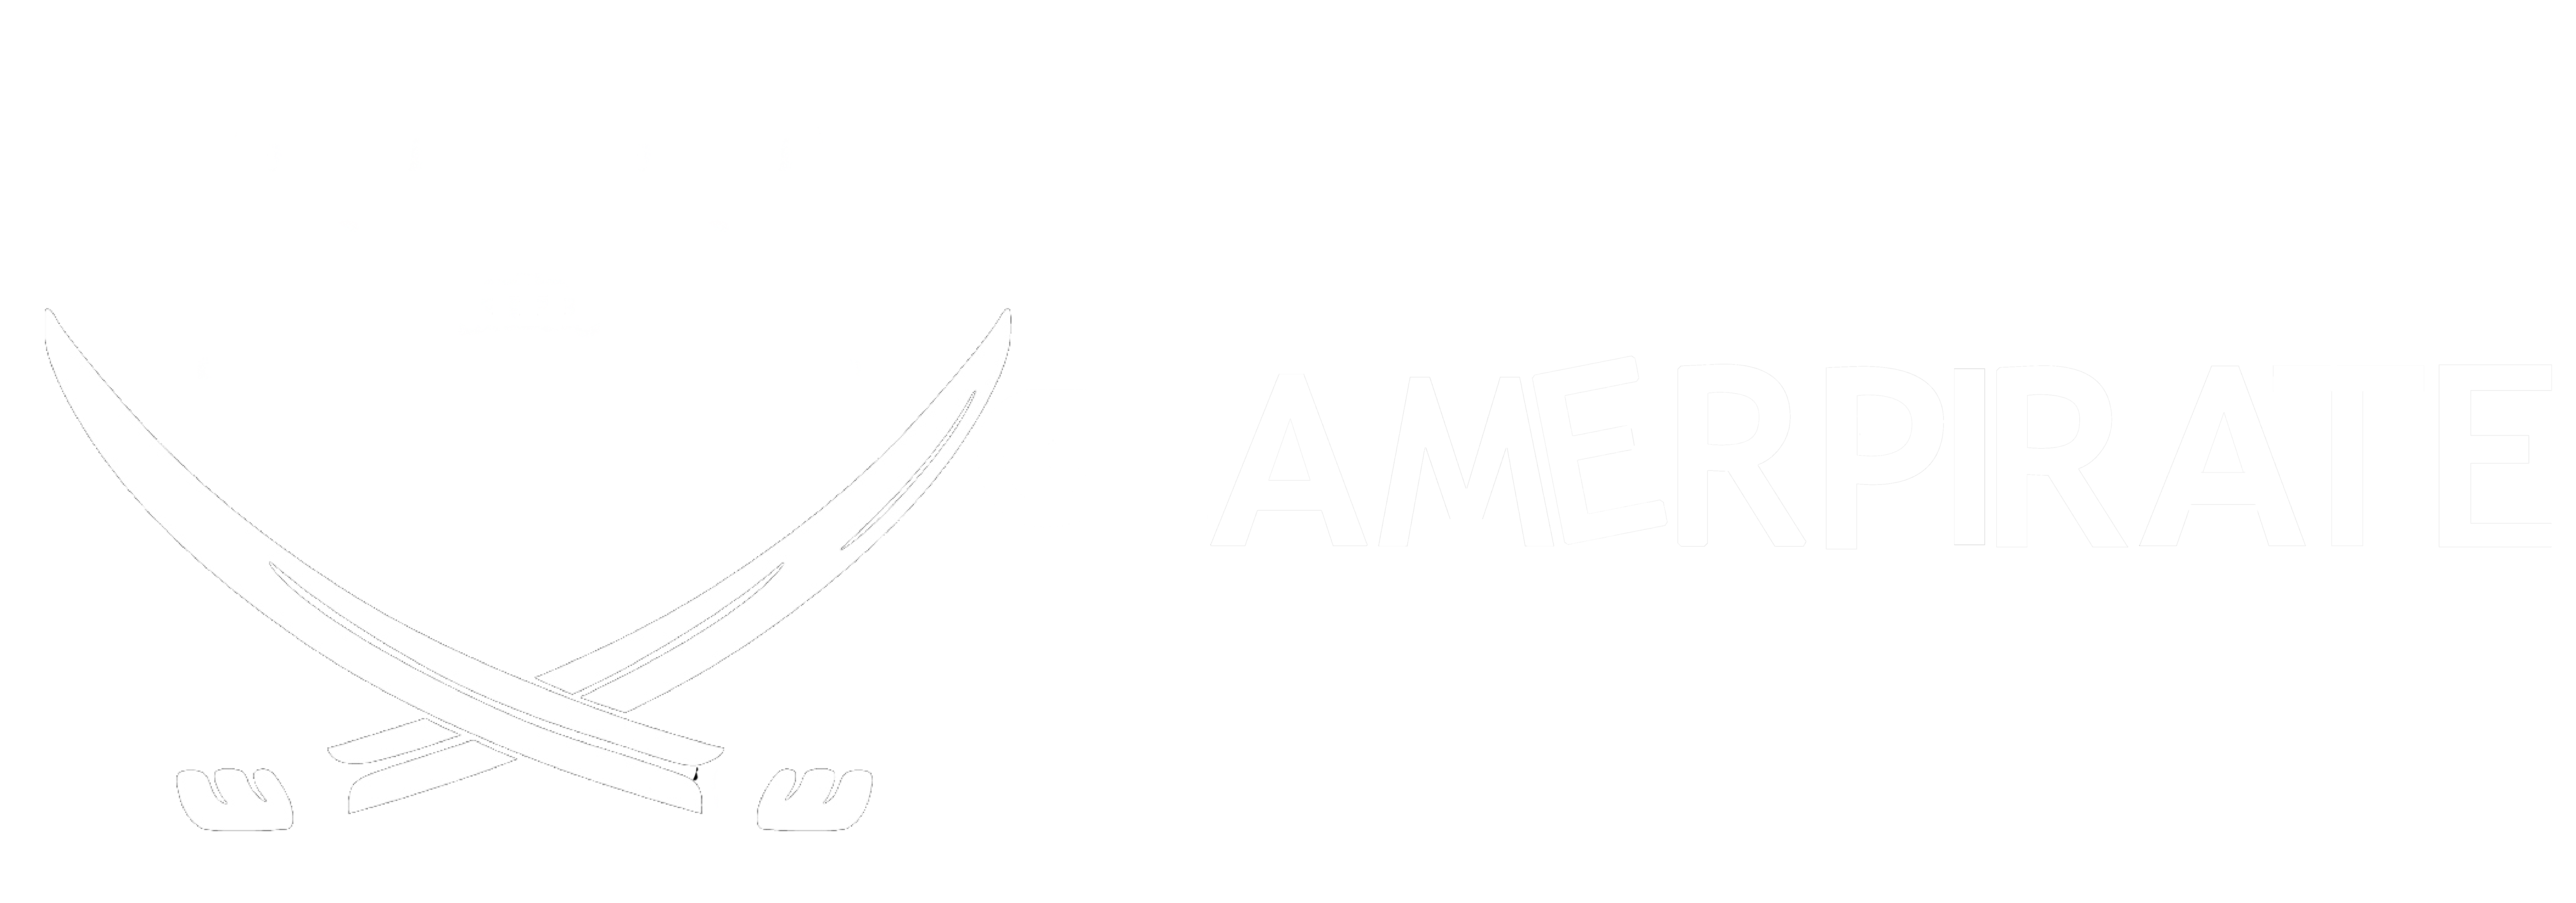 GamerPirate Logo